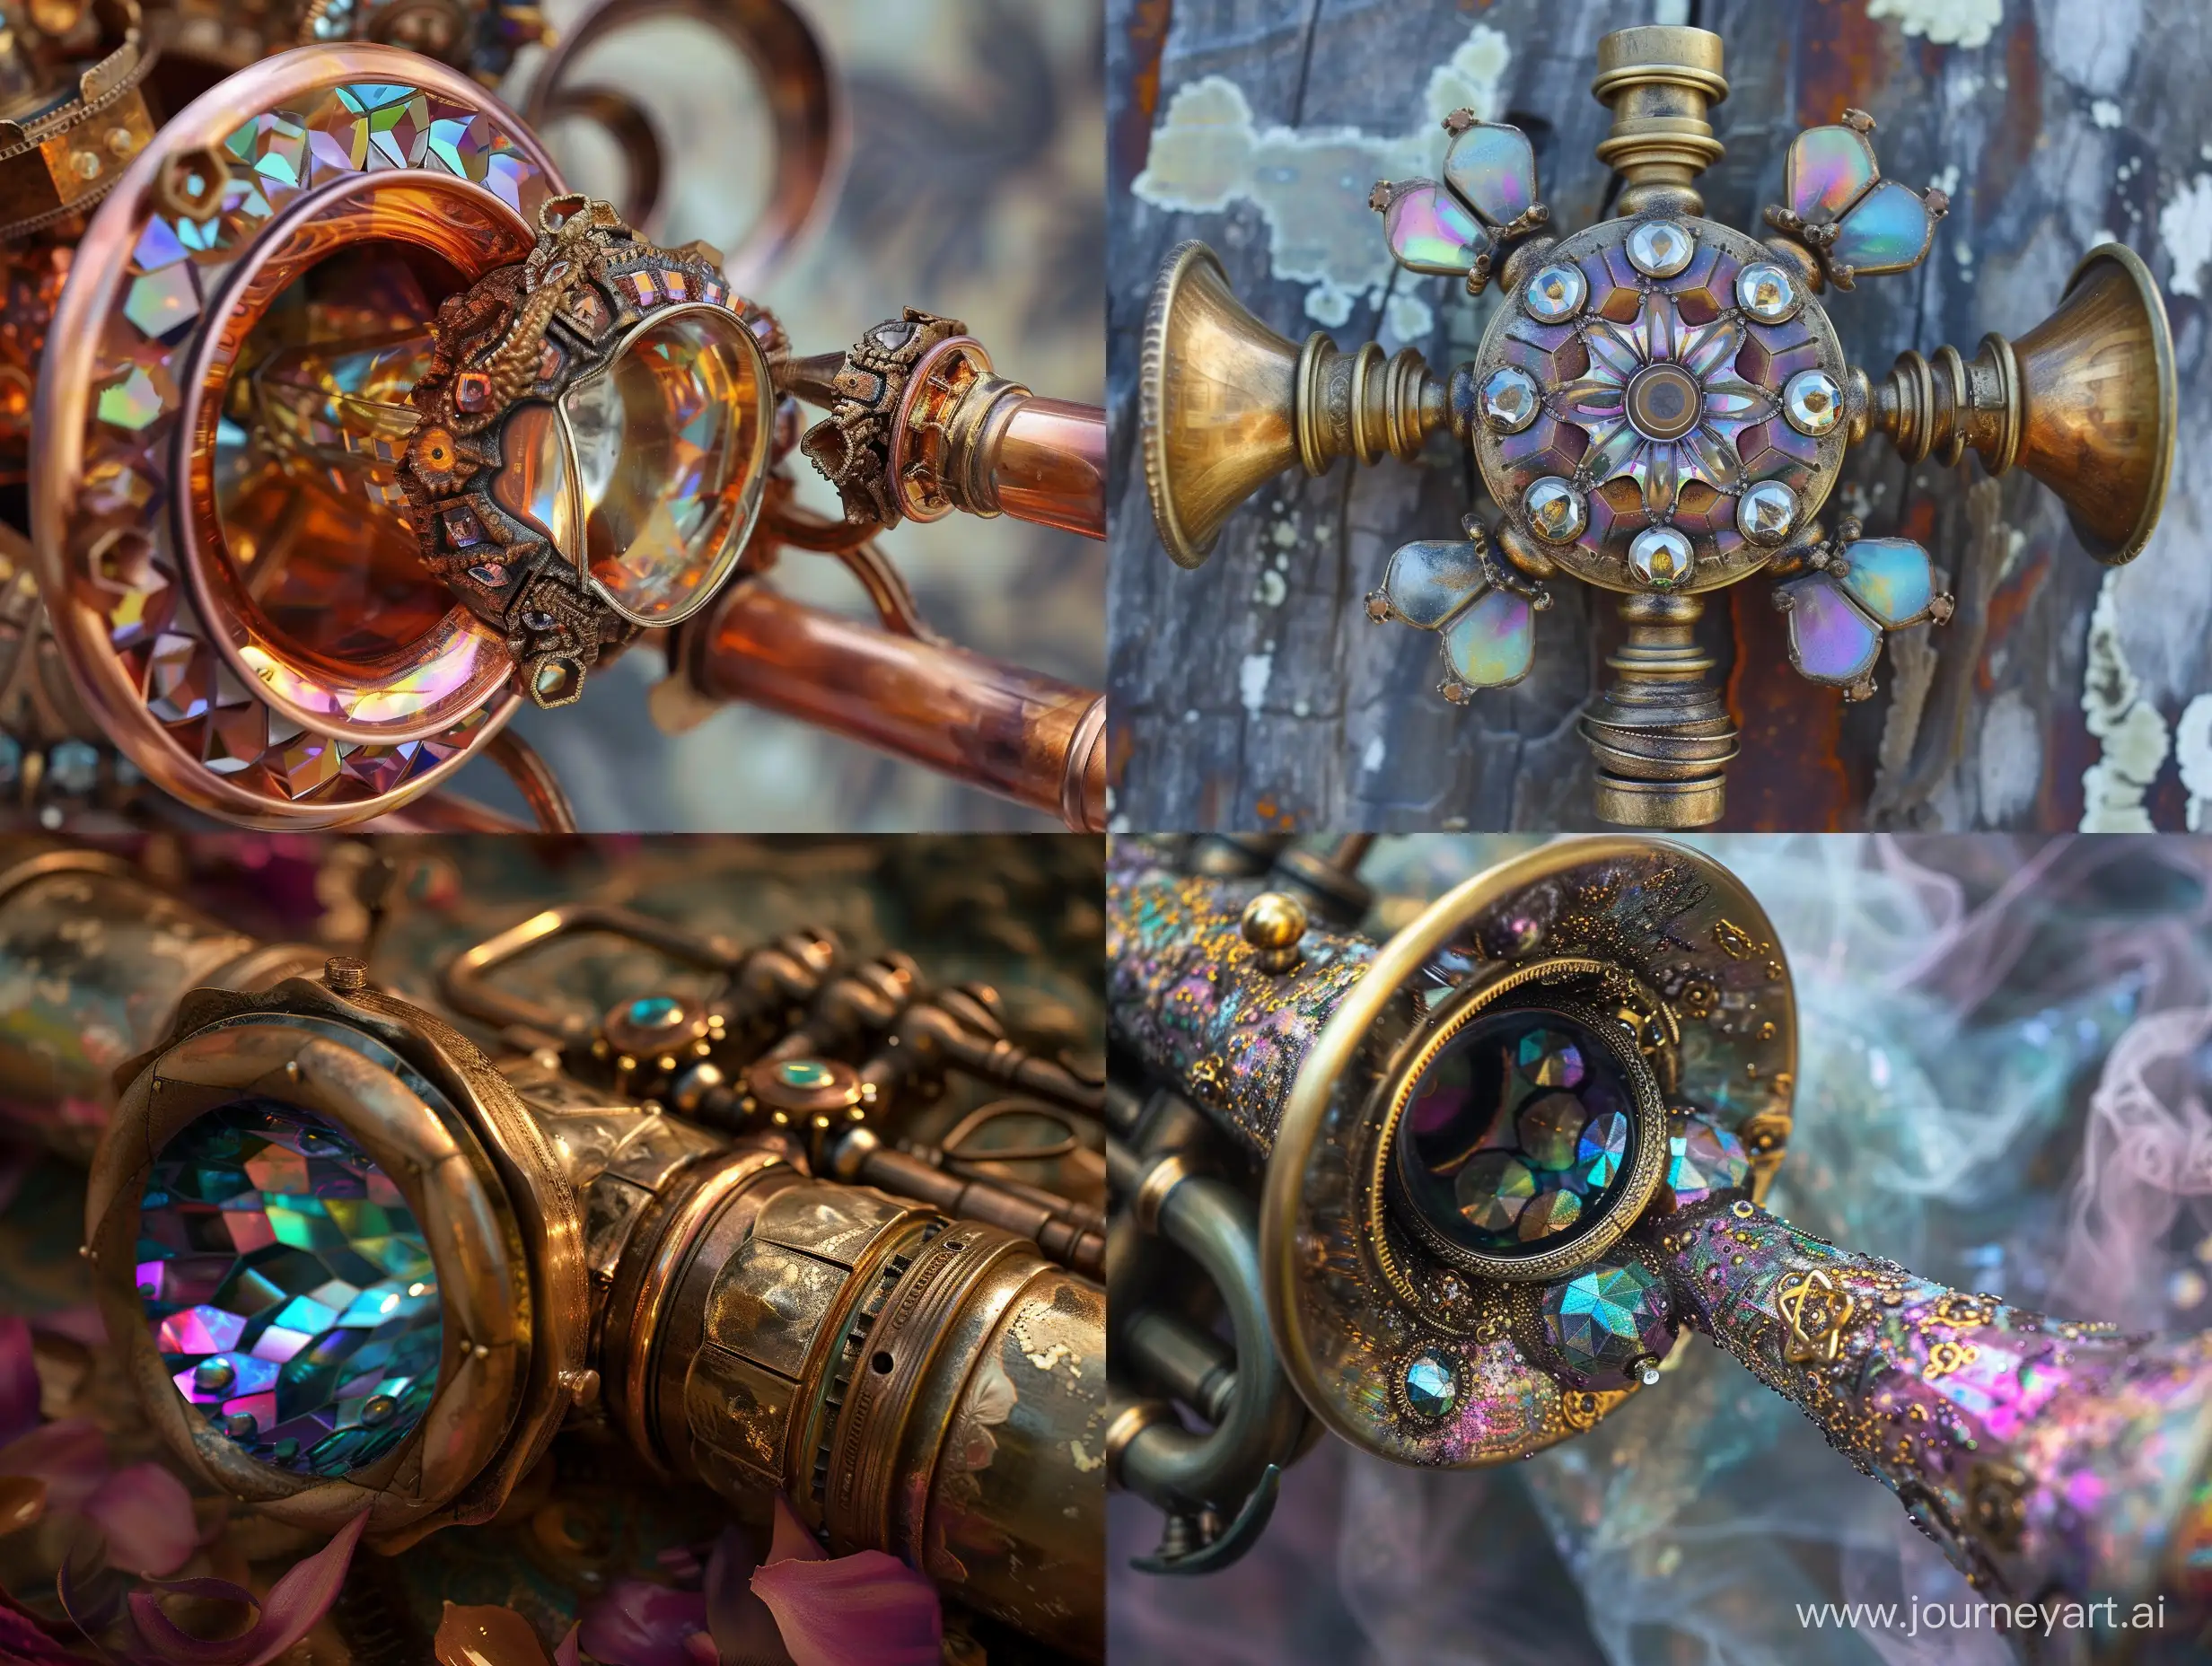 Joyful-Steampunk-Kaleidoscope-Art-with-Intricate-Details